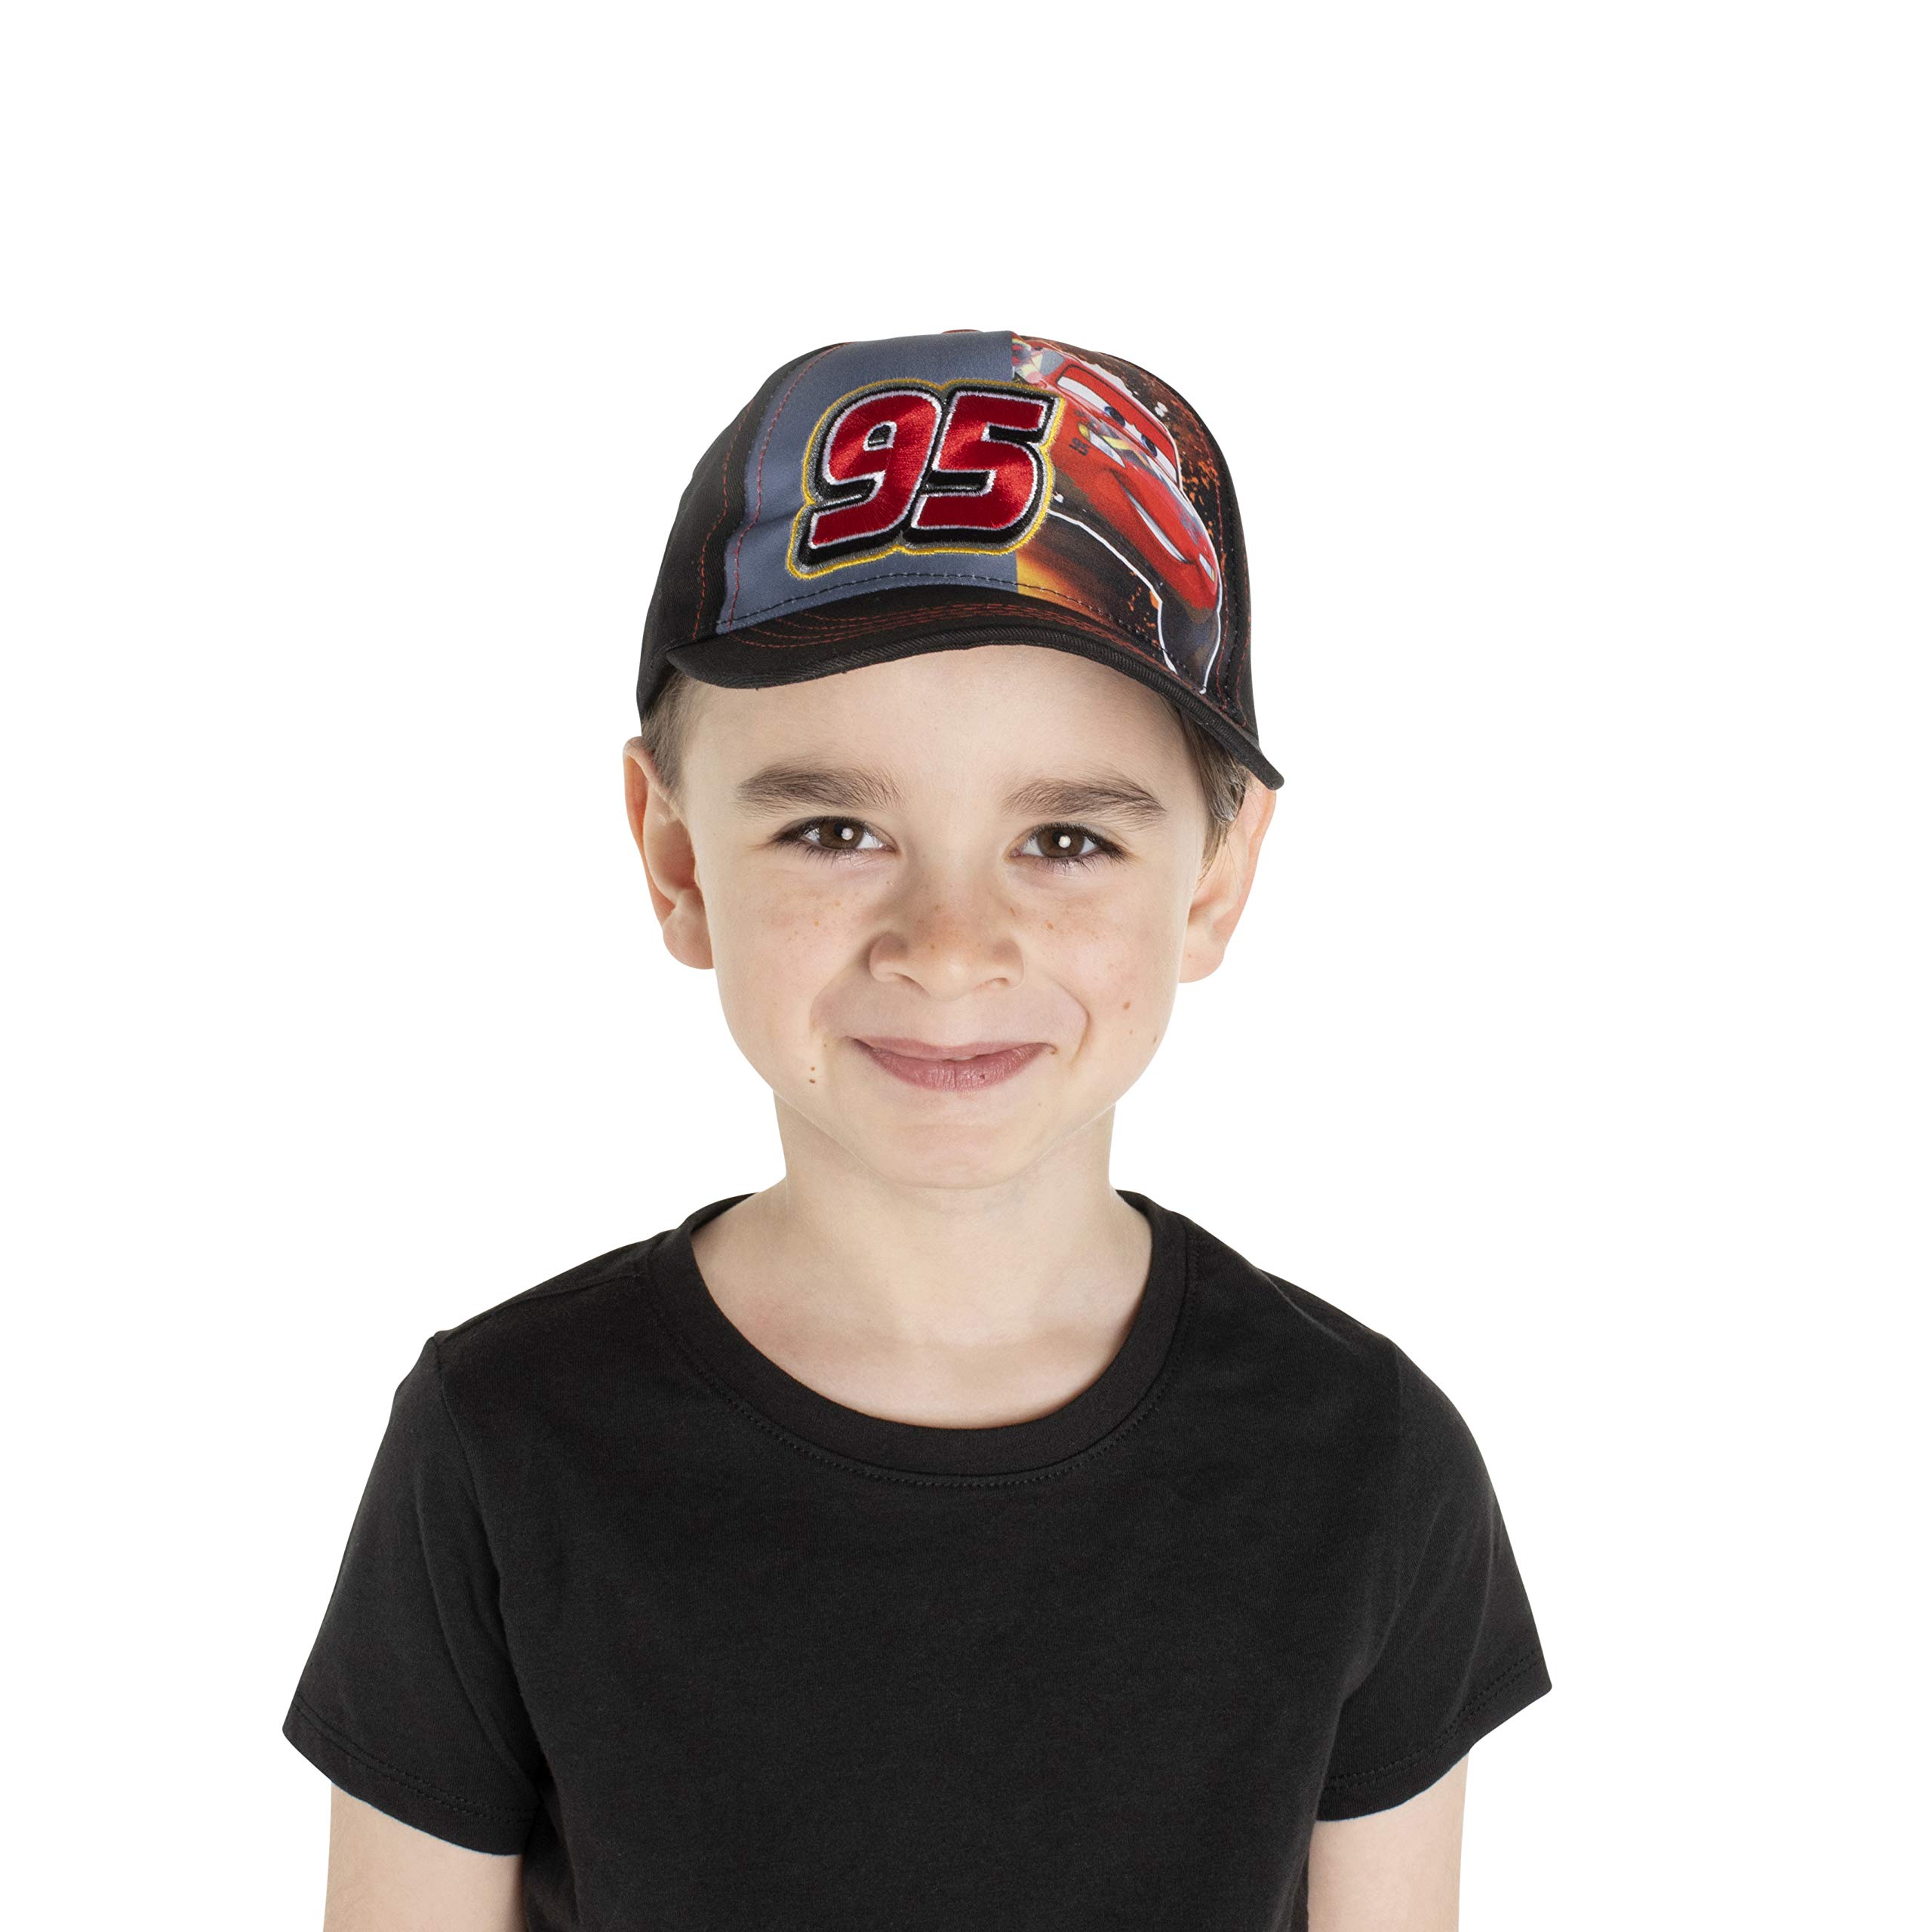 Disney Boys Baseball Cap, Lightning McQueen Adjustable Toddler Hat, Ages 2-4 Or Boy Hats for Kids Ages 4-7